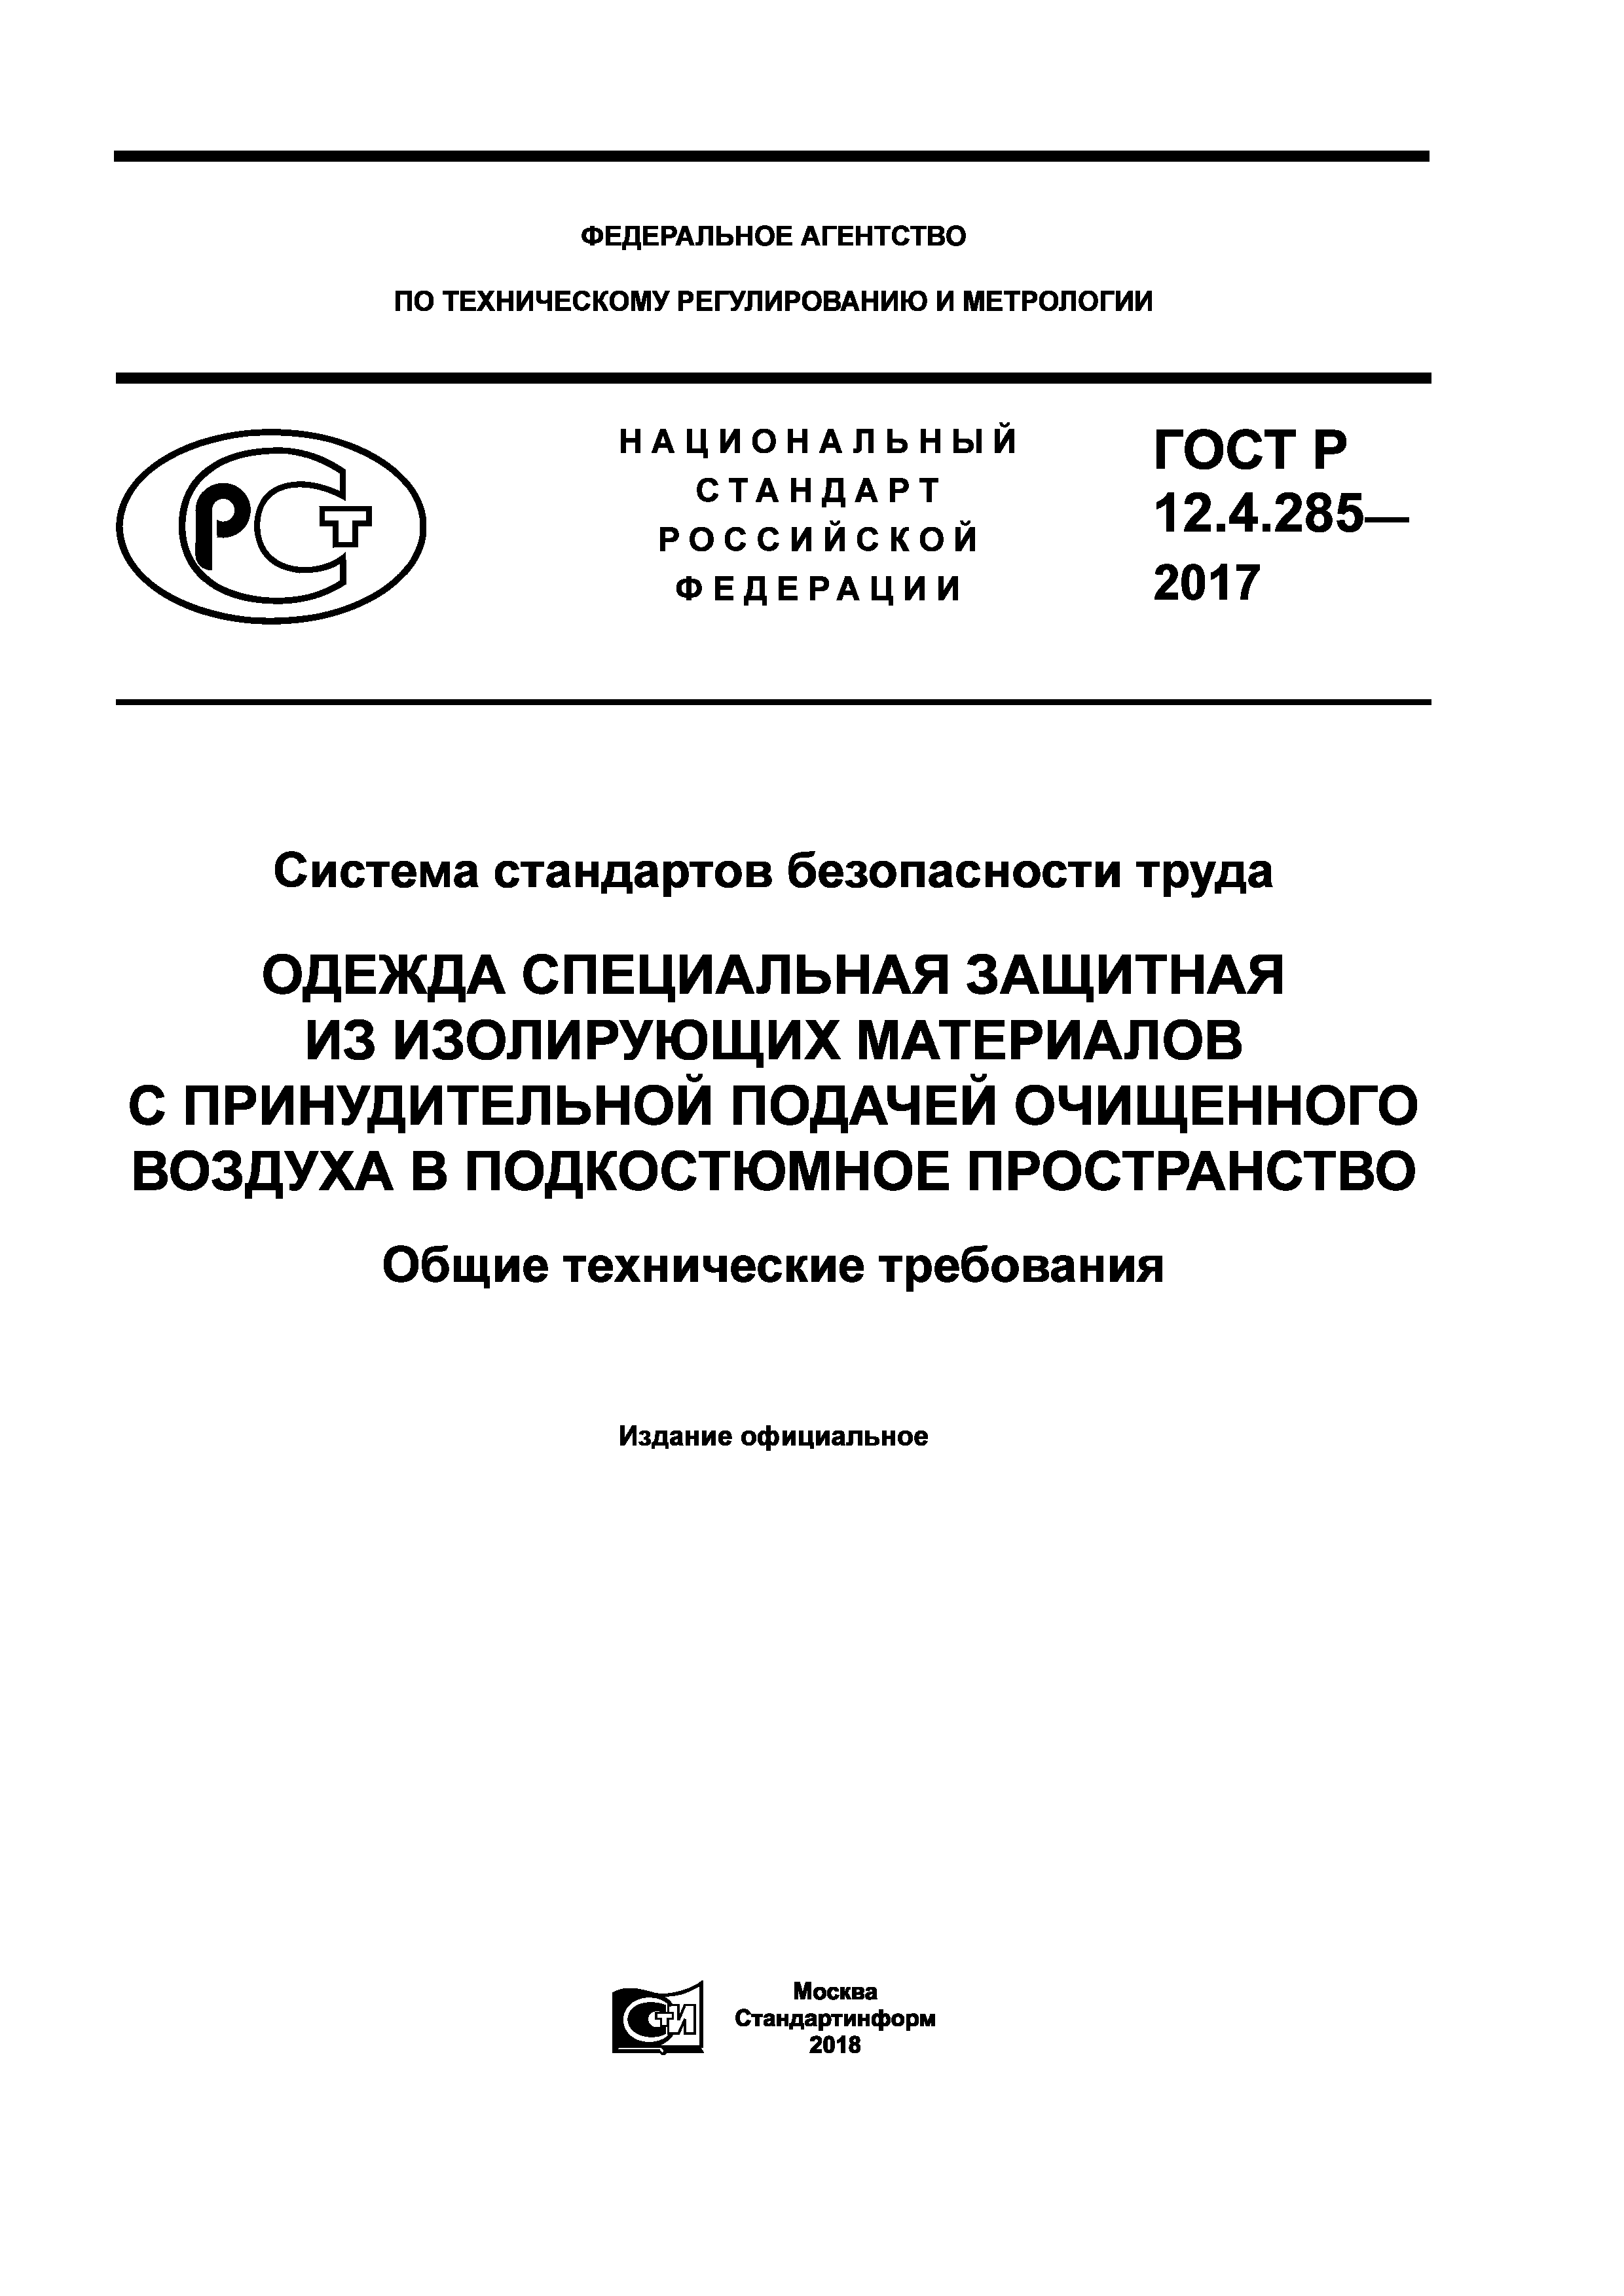 ГОСТ Р 12.4.285-2017